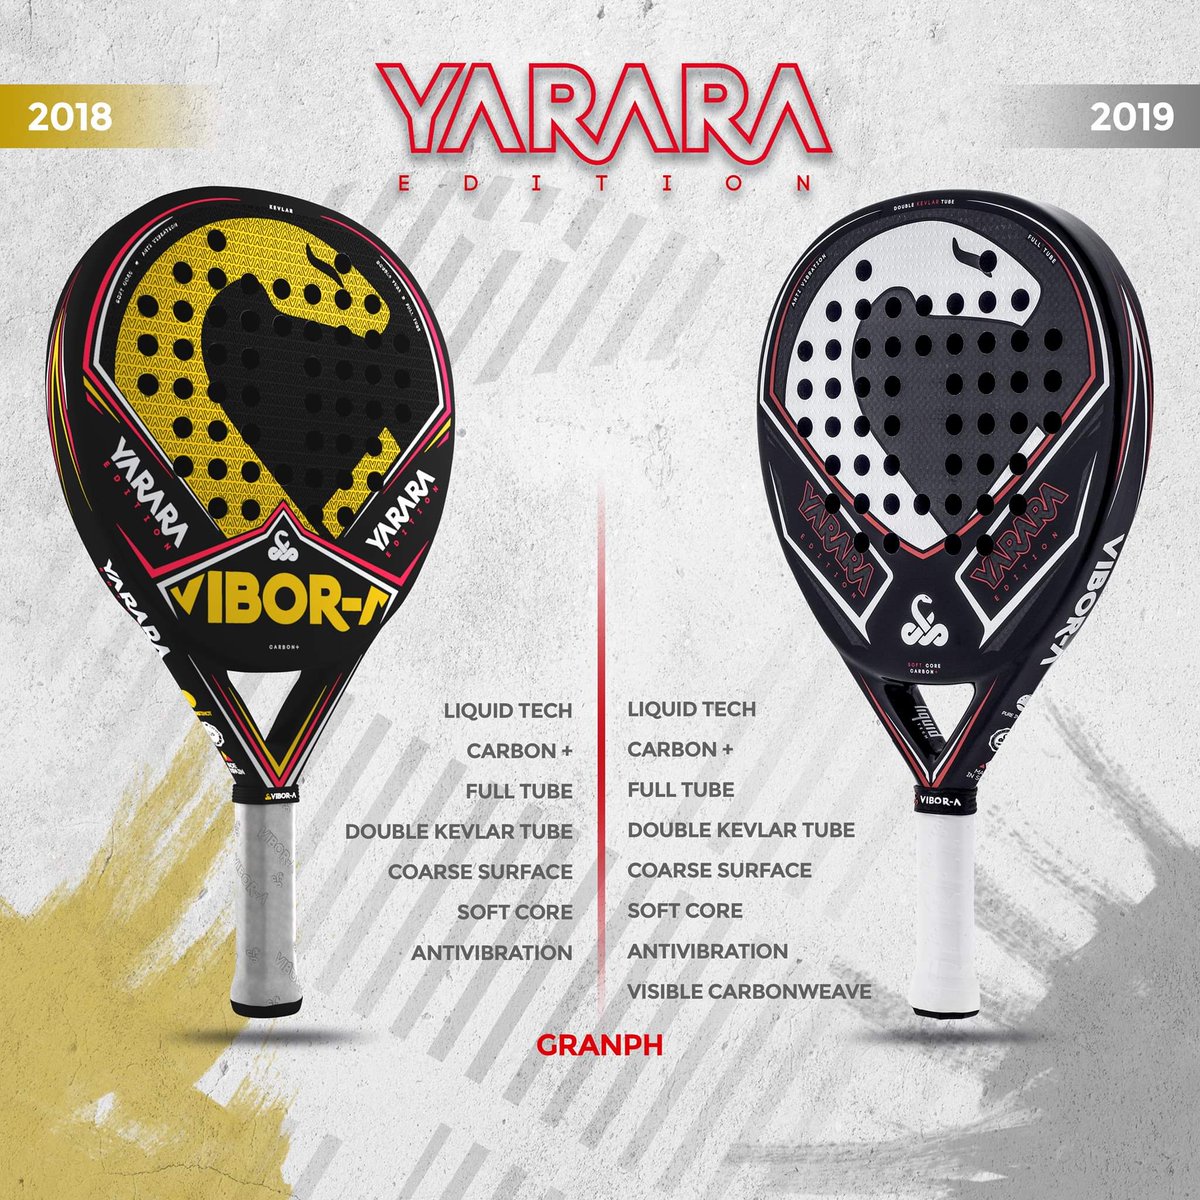 dinero Alentar Zumbido Review Vibora Yarara Edition 2019 | Time2Padel